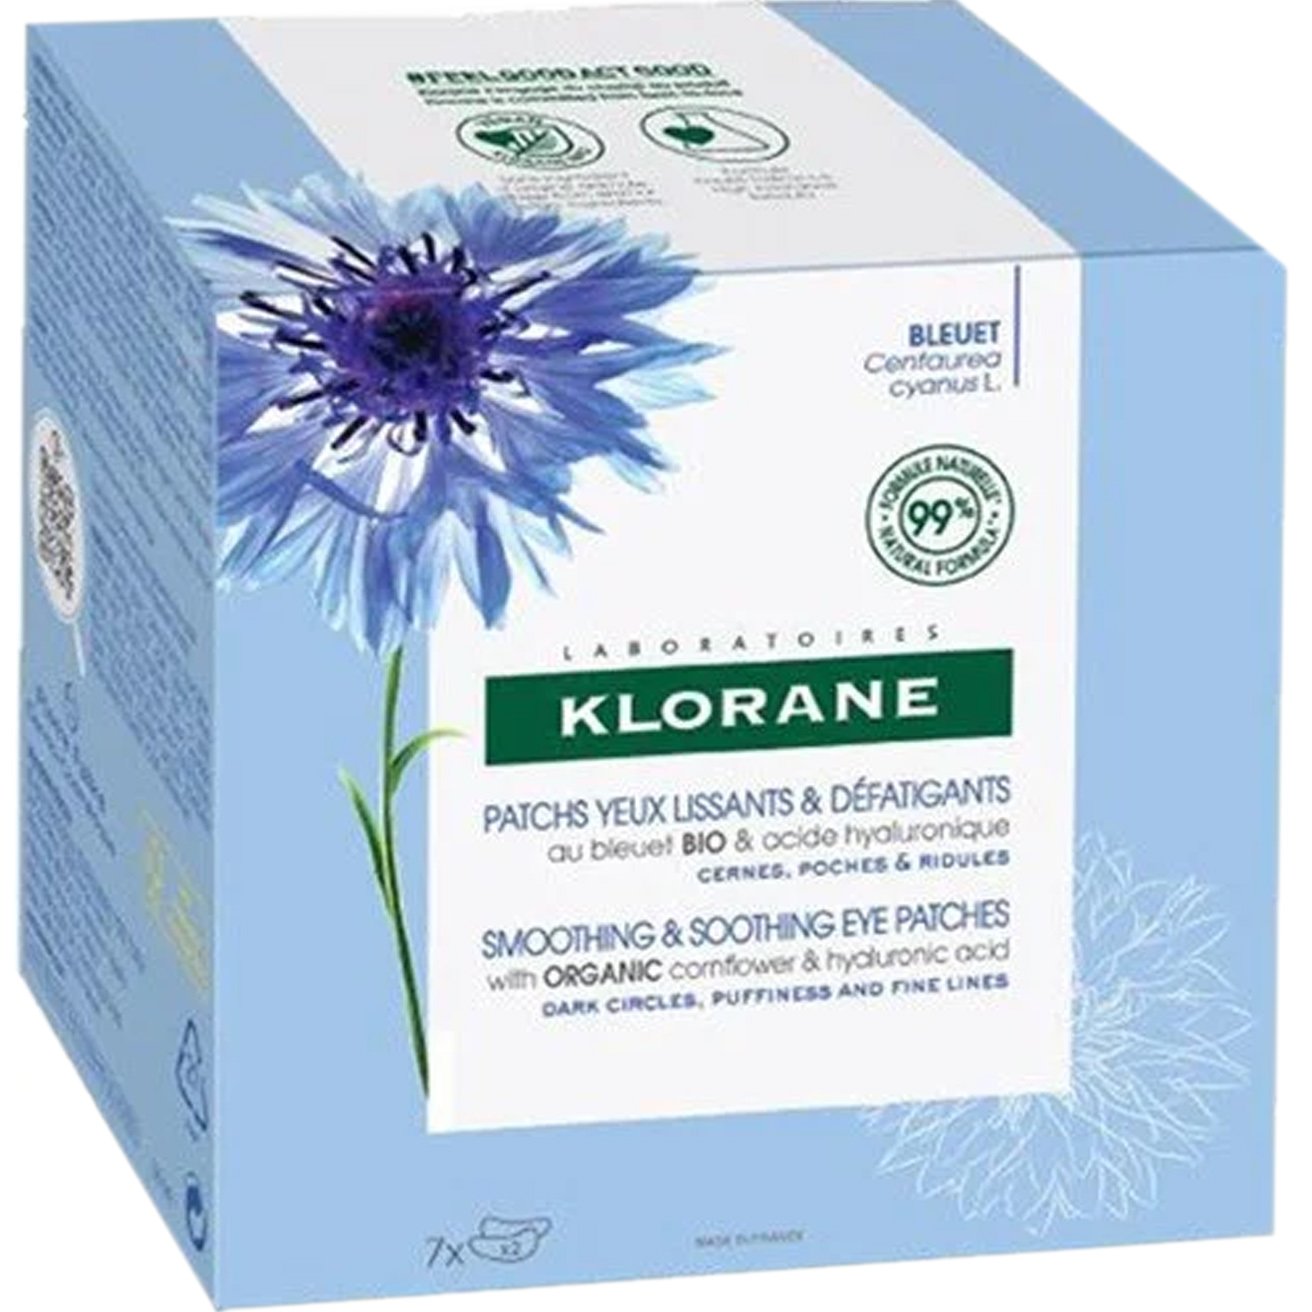 Klorane Cornflower & Hyaluronic Acid Smoothing & Soothing Eye Patches Επιθέματα Ματιών Κατά των Σημαδιών Κόπωσης με Βιολογική Κυανή Κενταύρια 7x2Patches (14 Τεμάχια) 39215